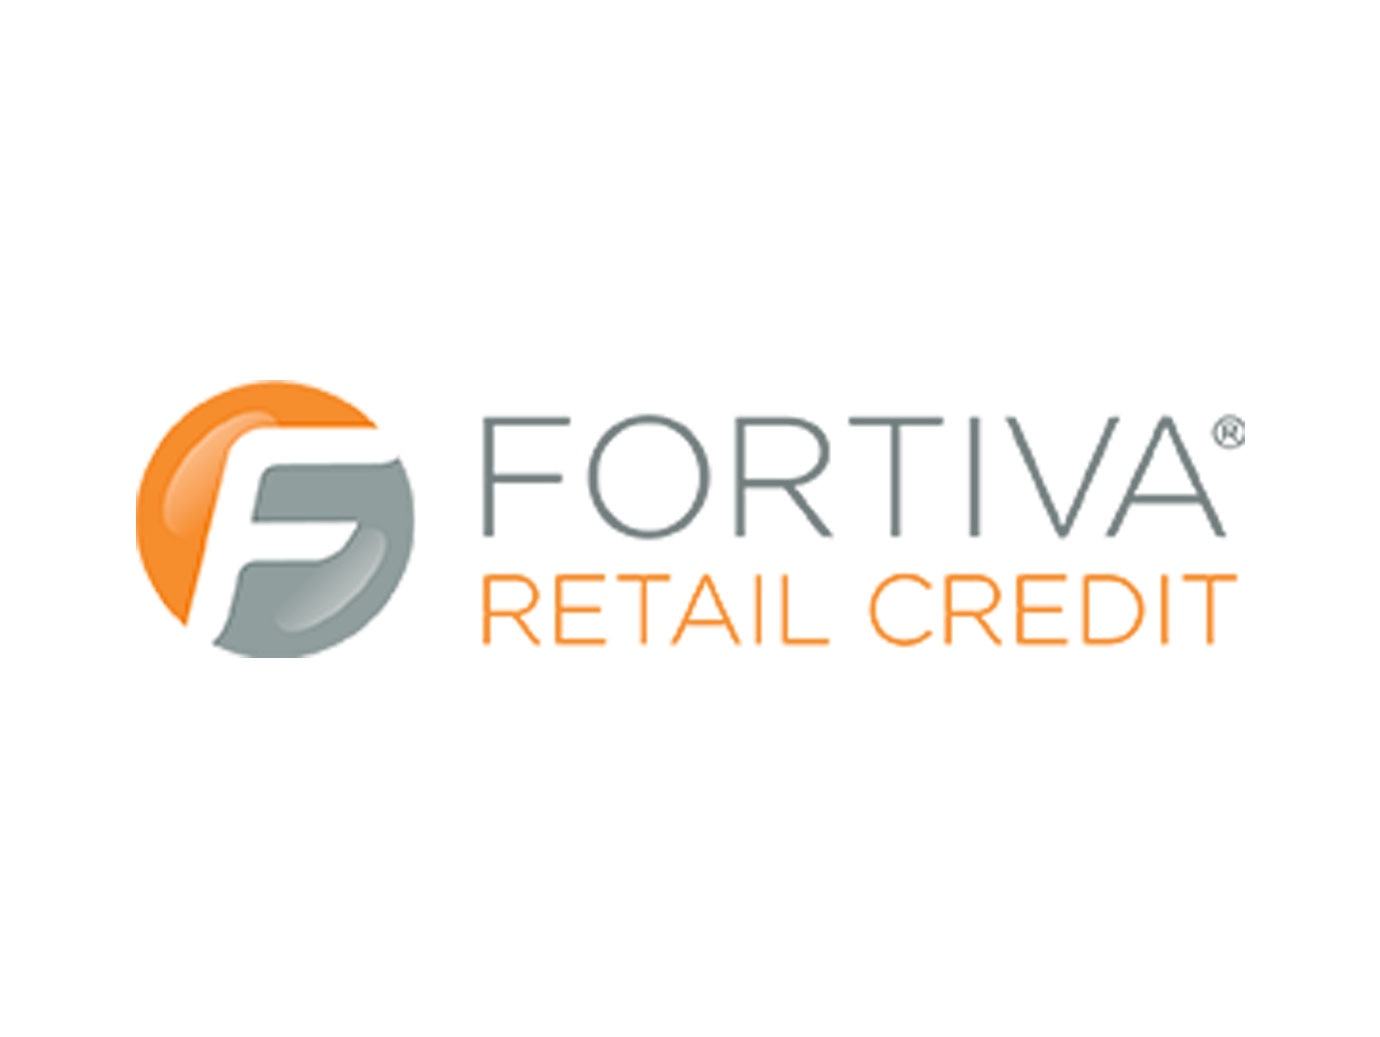 Fortiva retail credit logo